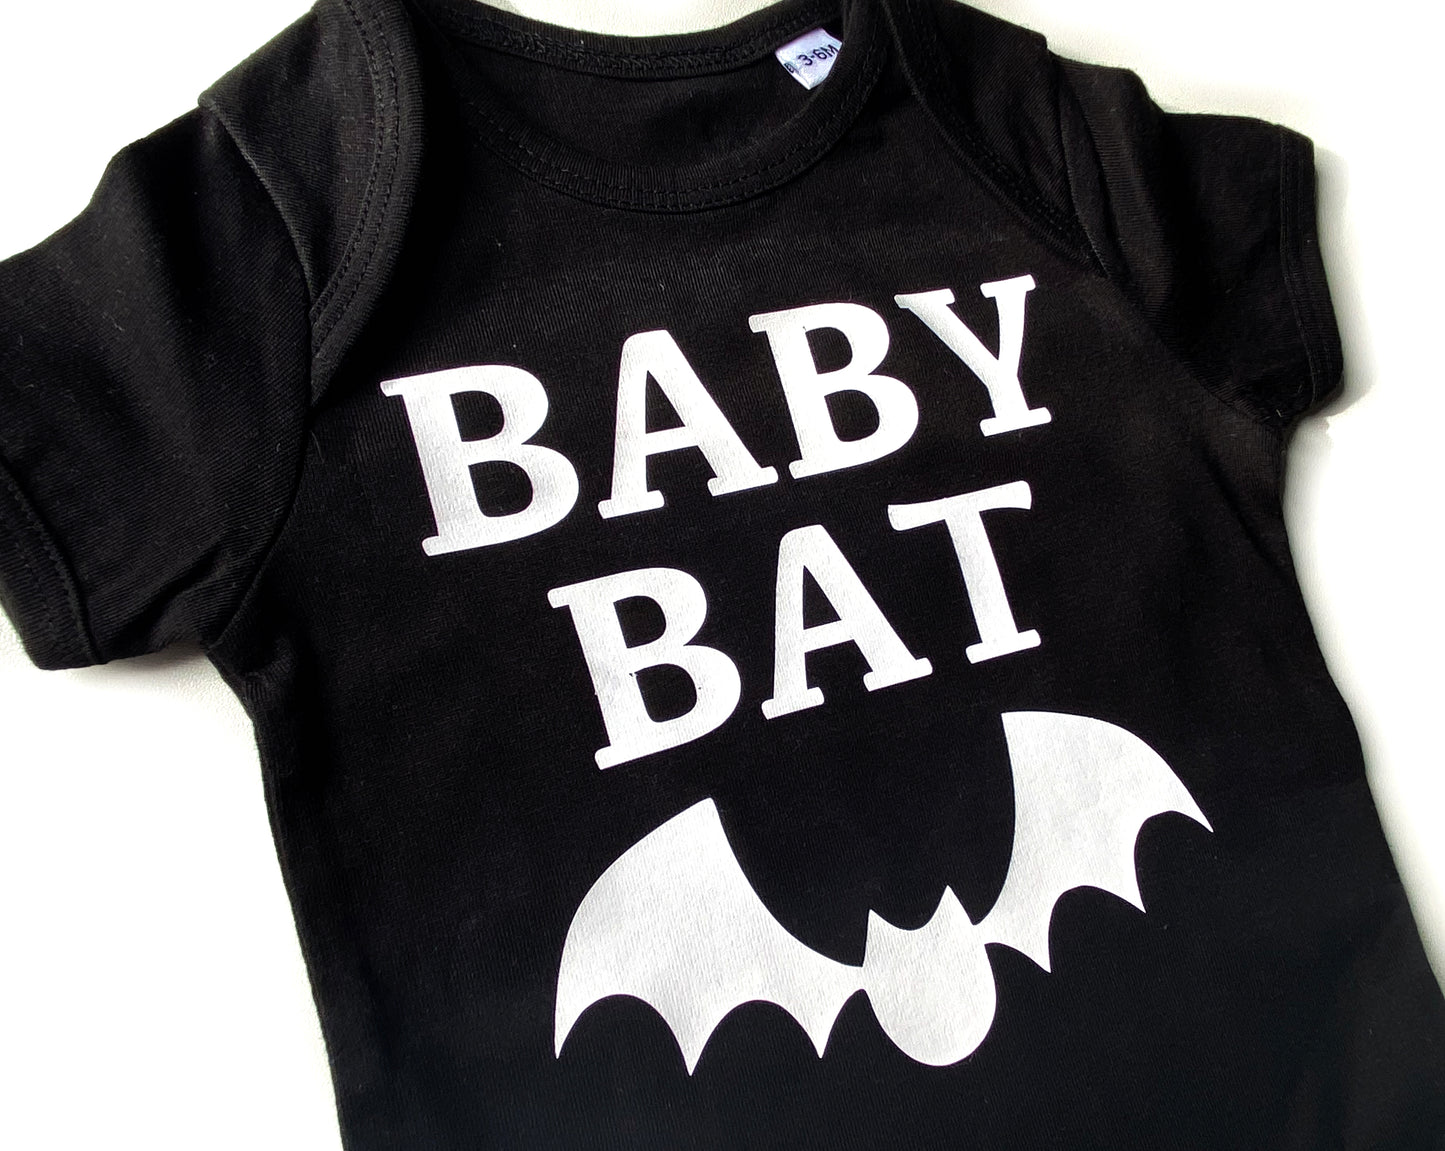 Kurzarmbody Baby Bat schwarz Halloween Gothic